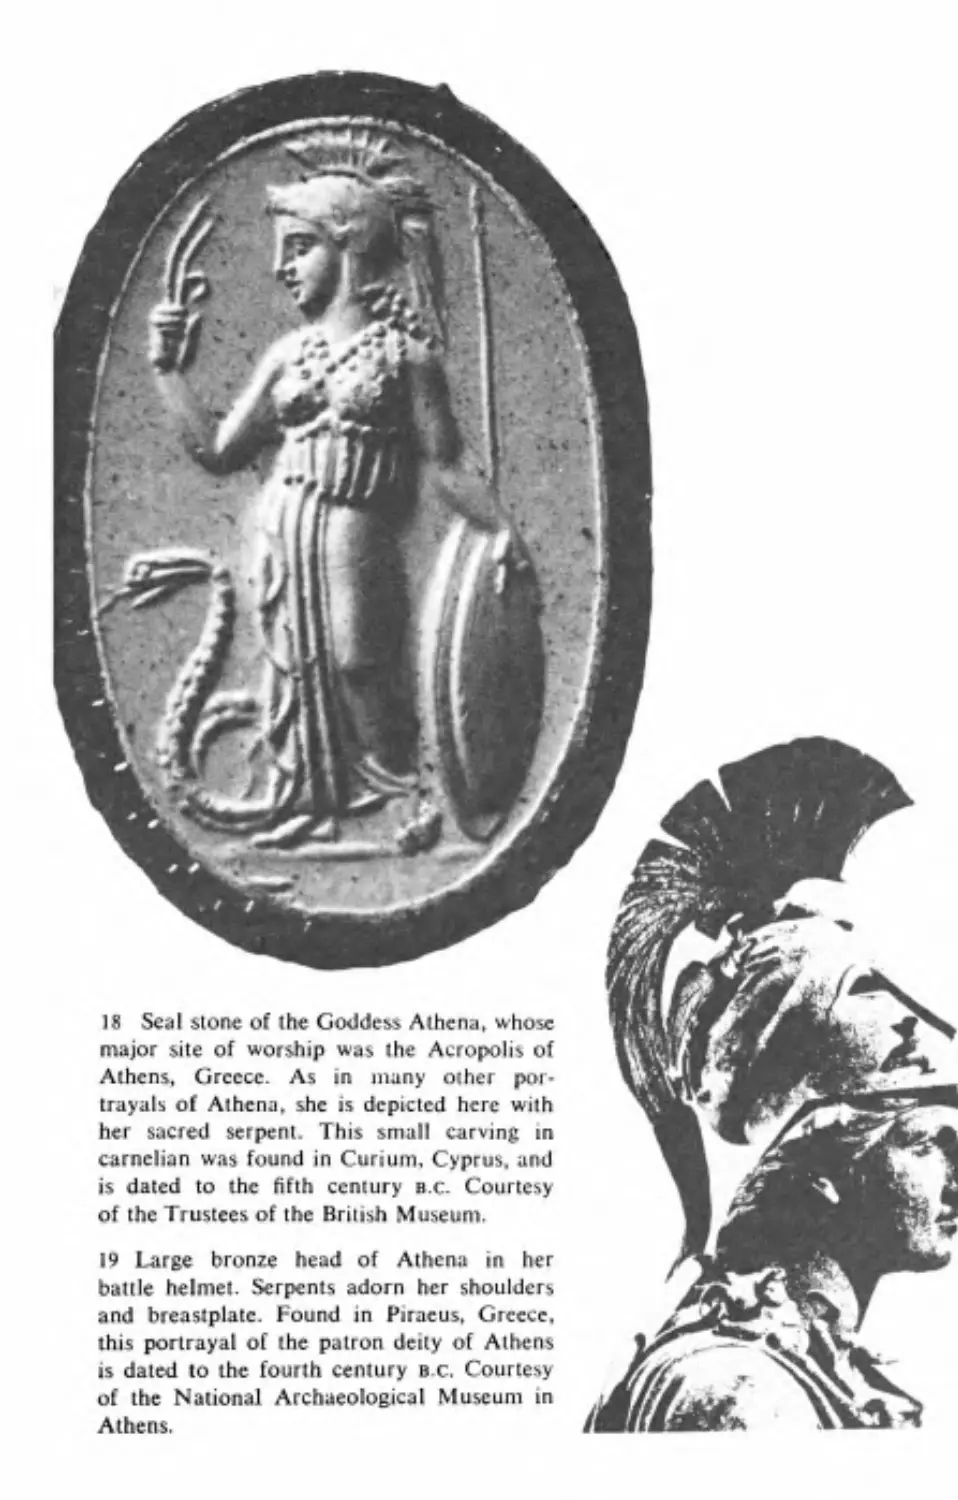 Seal stone of Athena
Athena in battle helmet